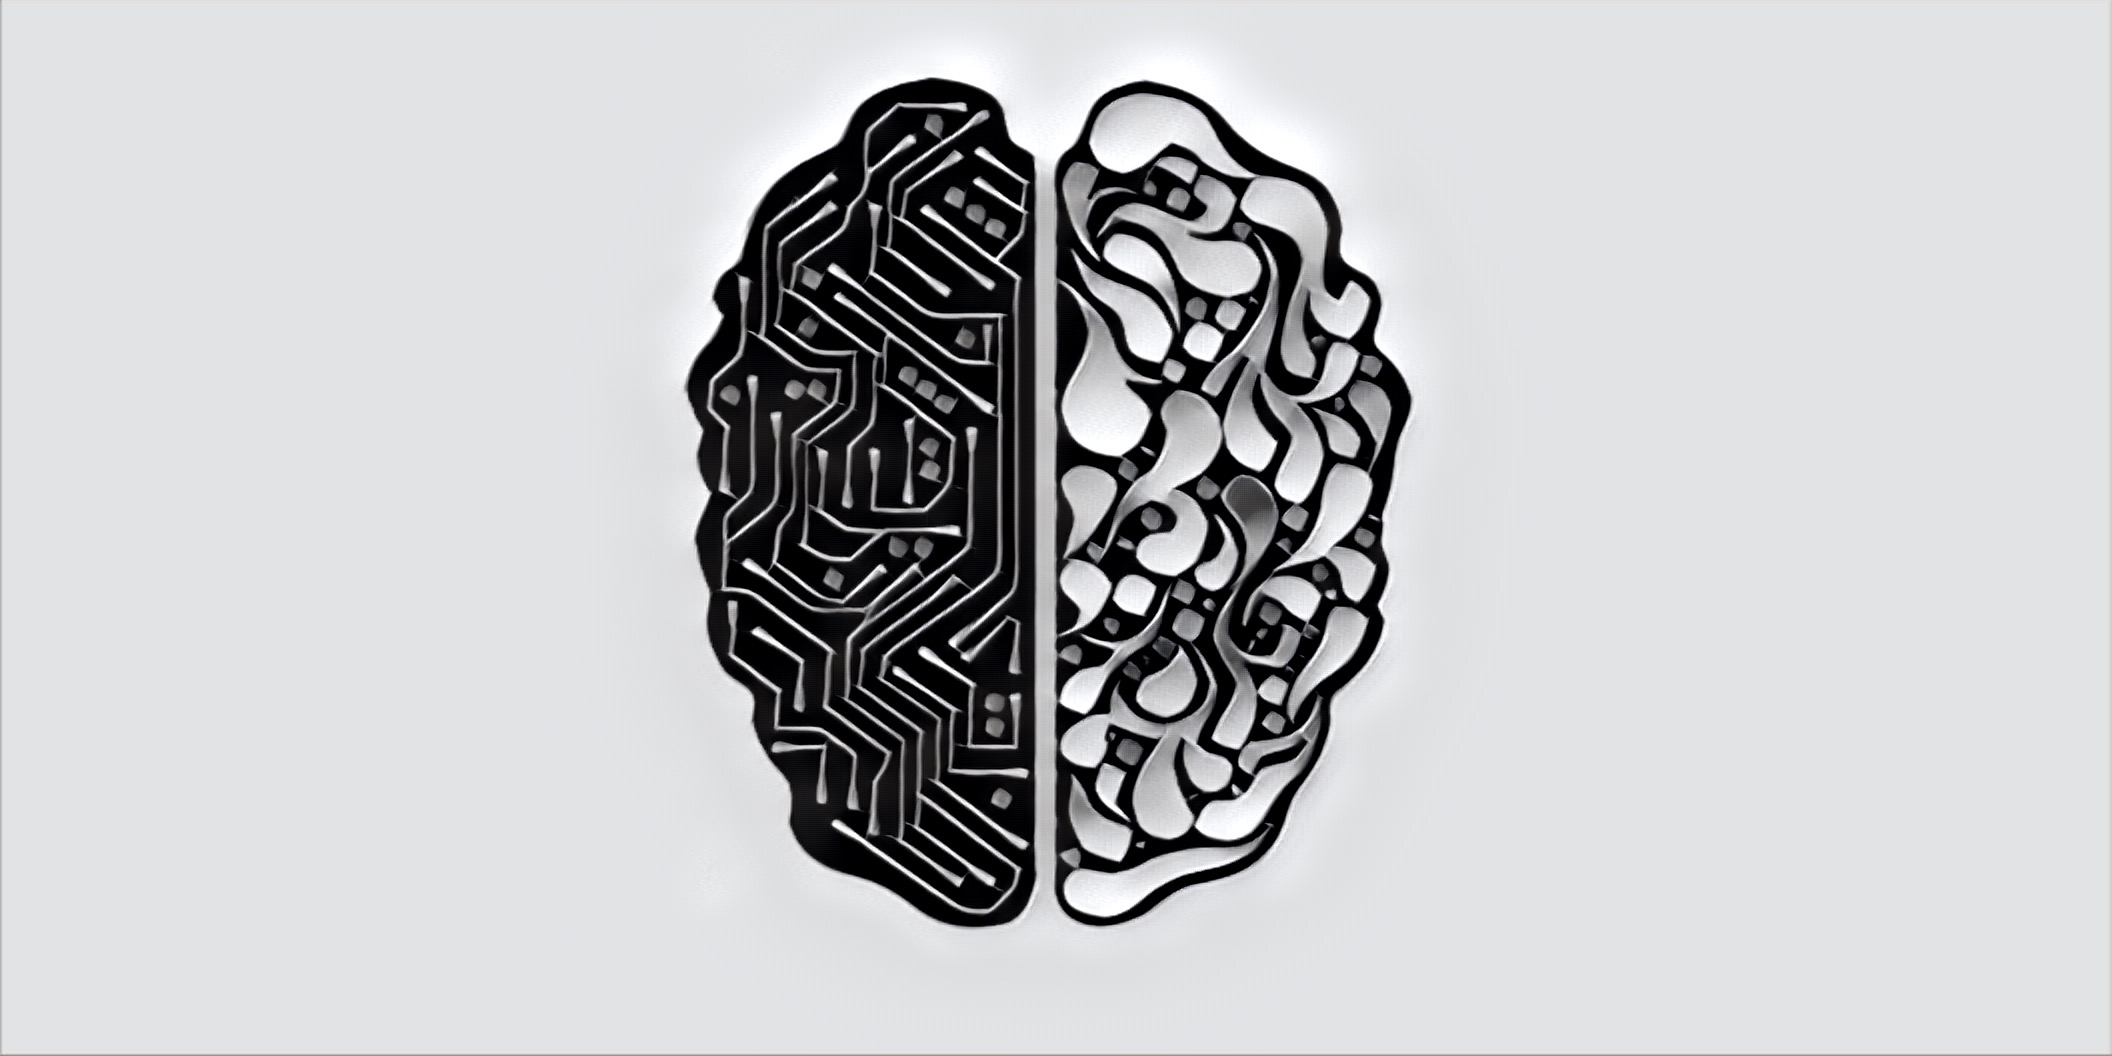 Become Tech Savvy Brain - Black and White